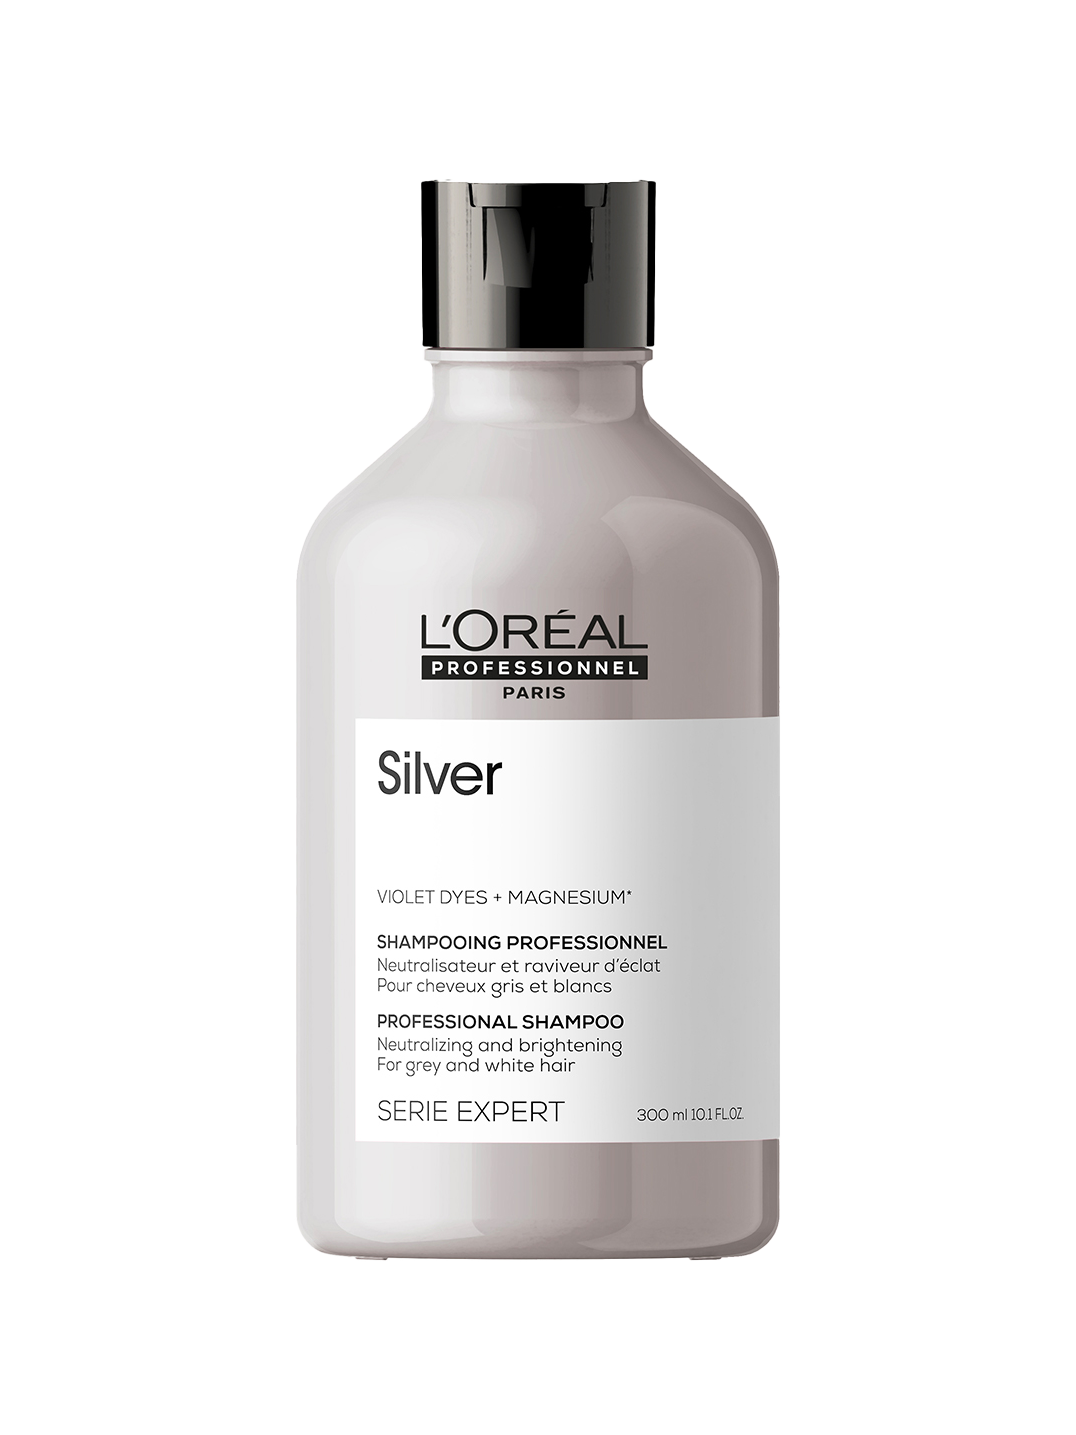 L'Oreal Silver Shampoo 300ml